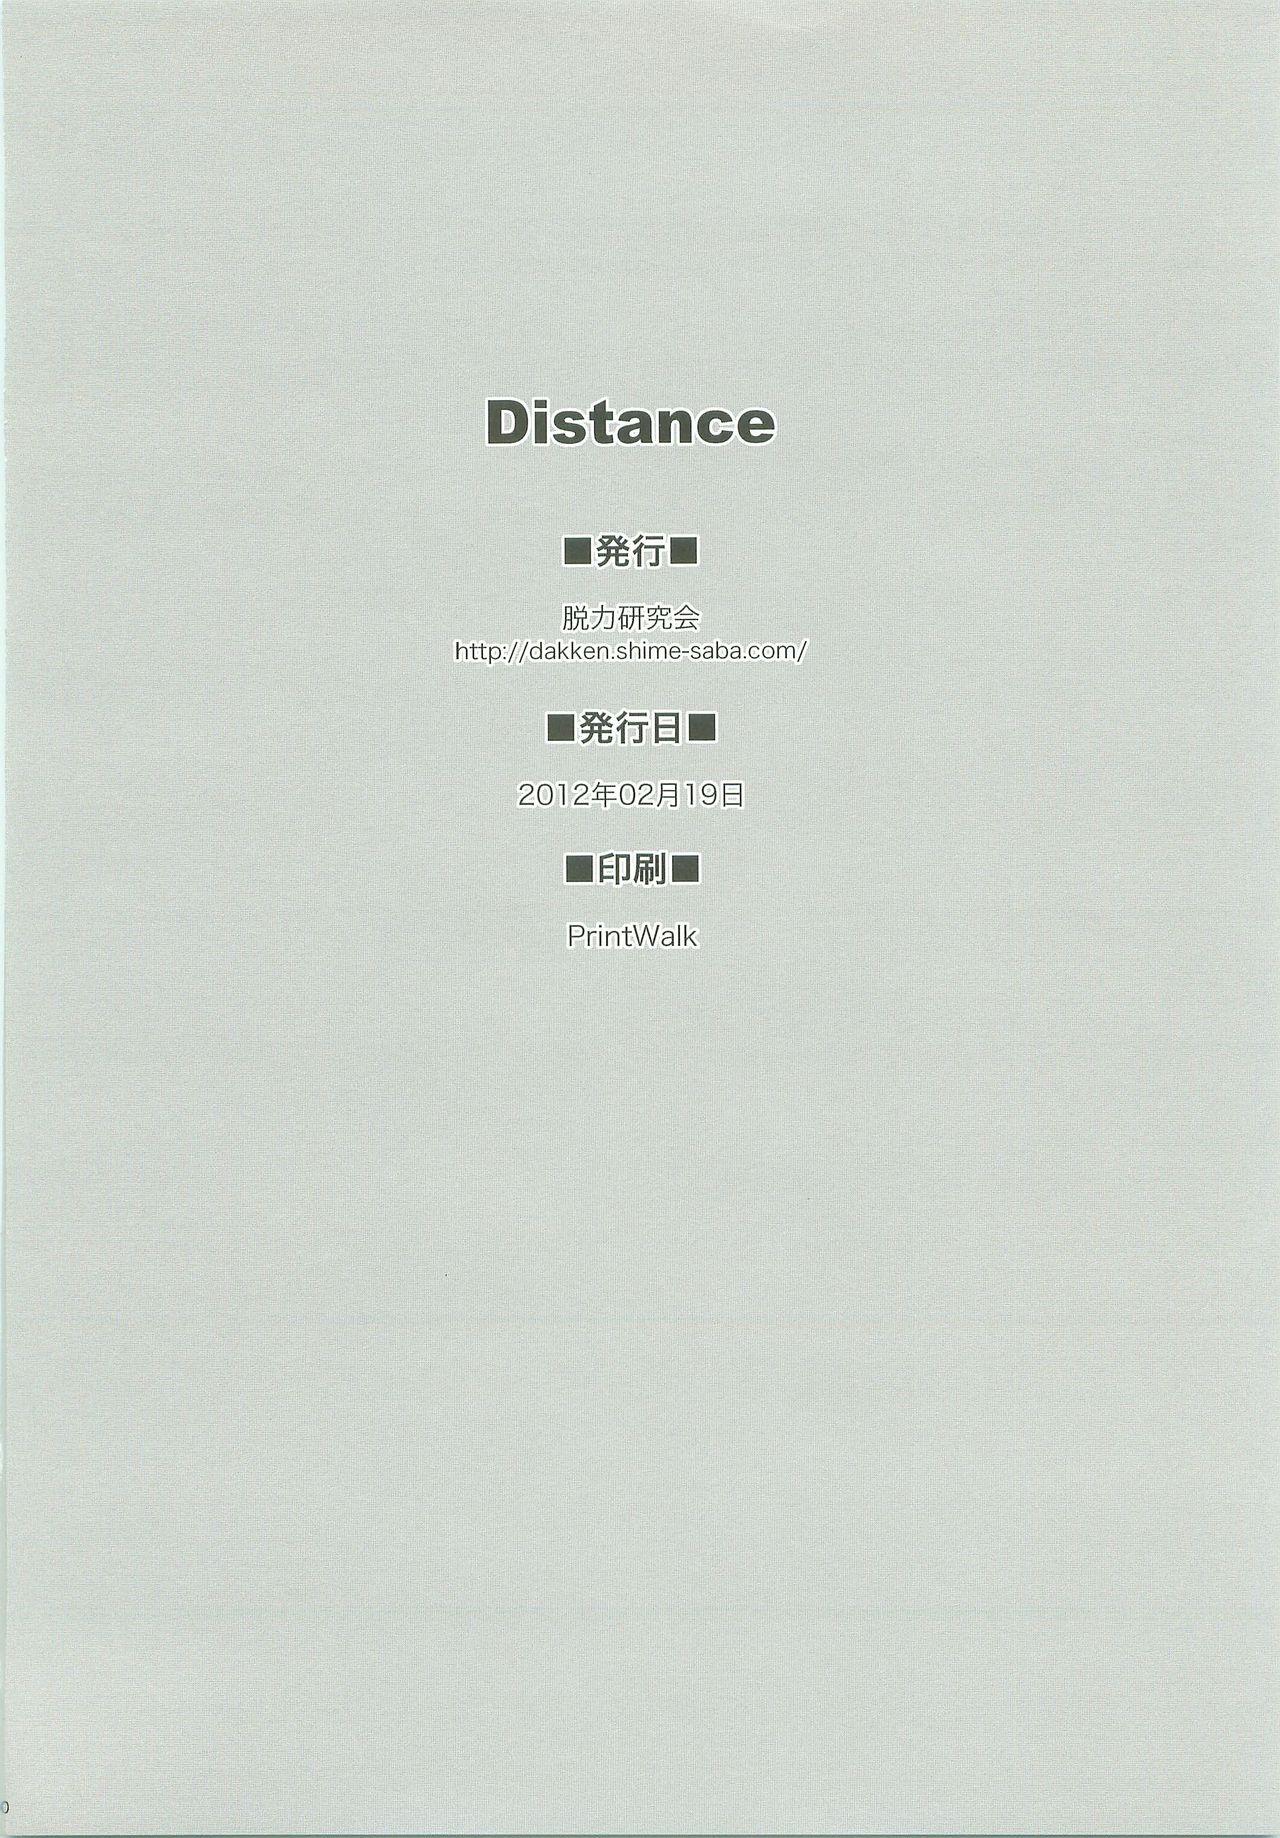 Distance 28